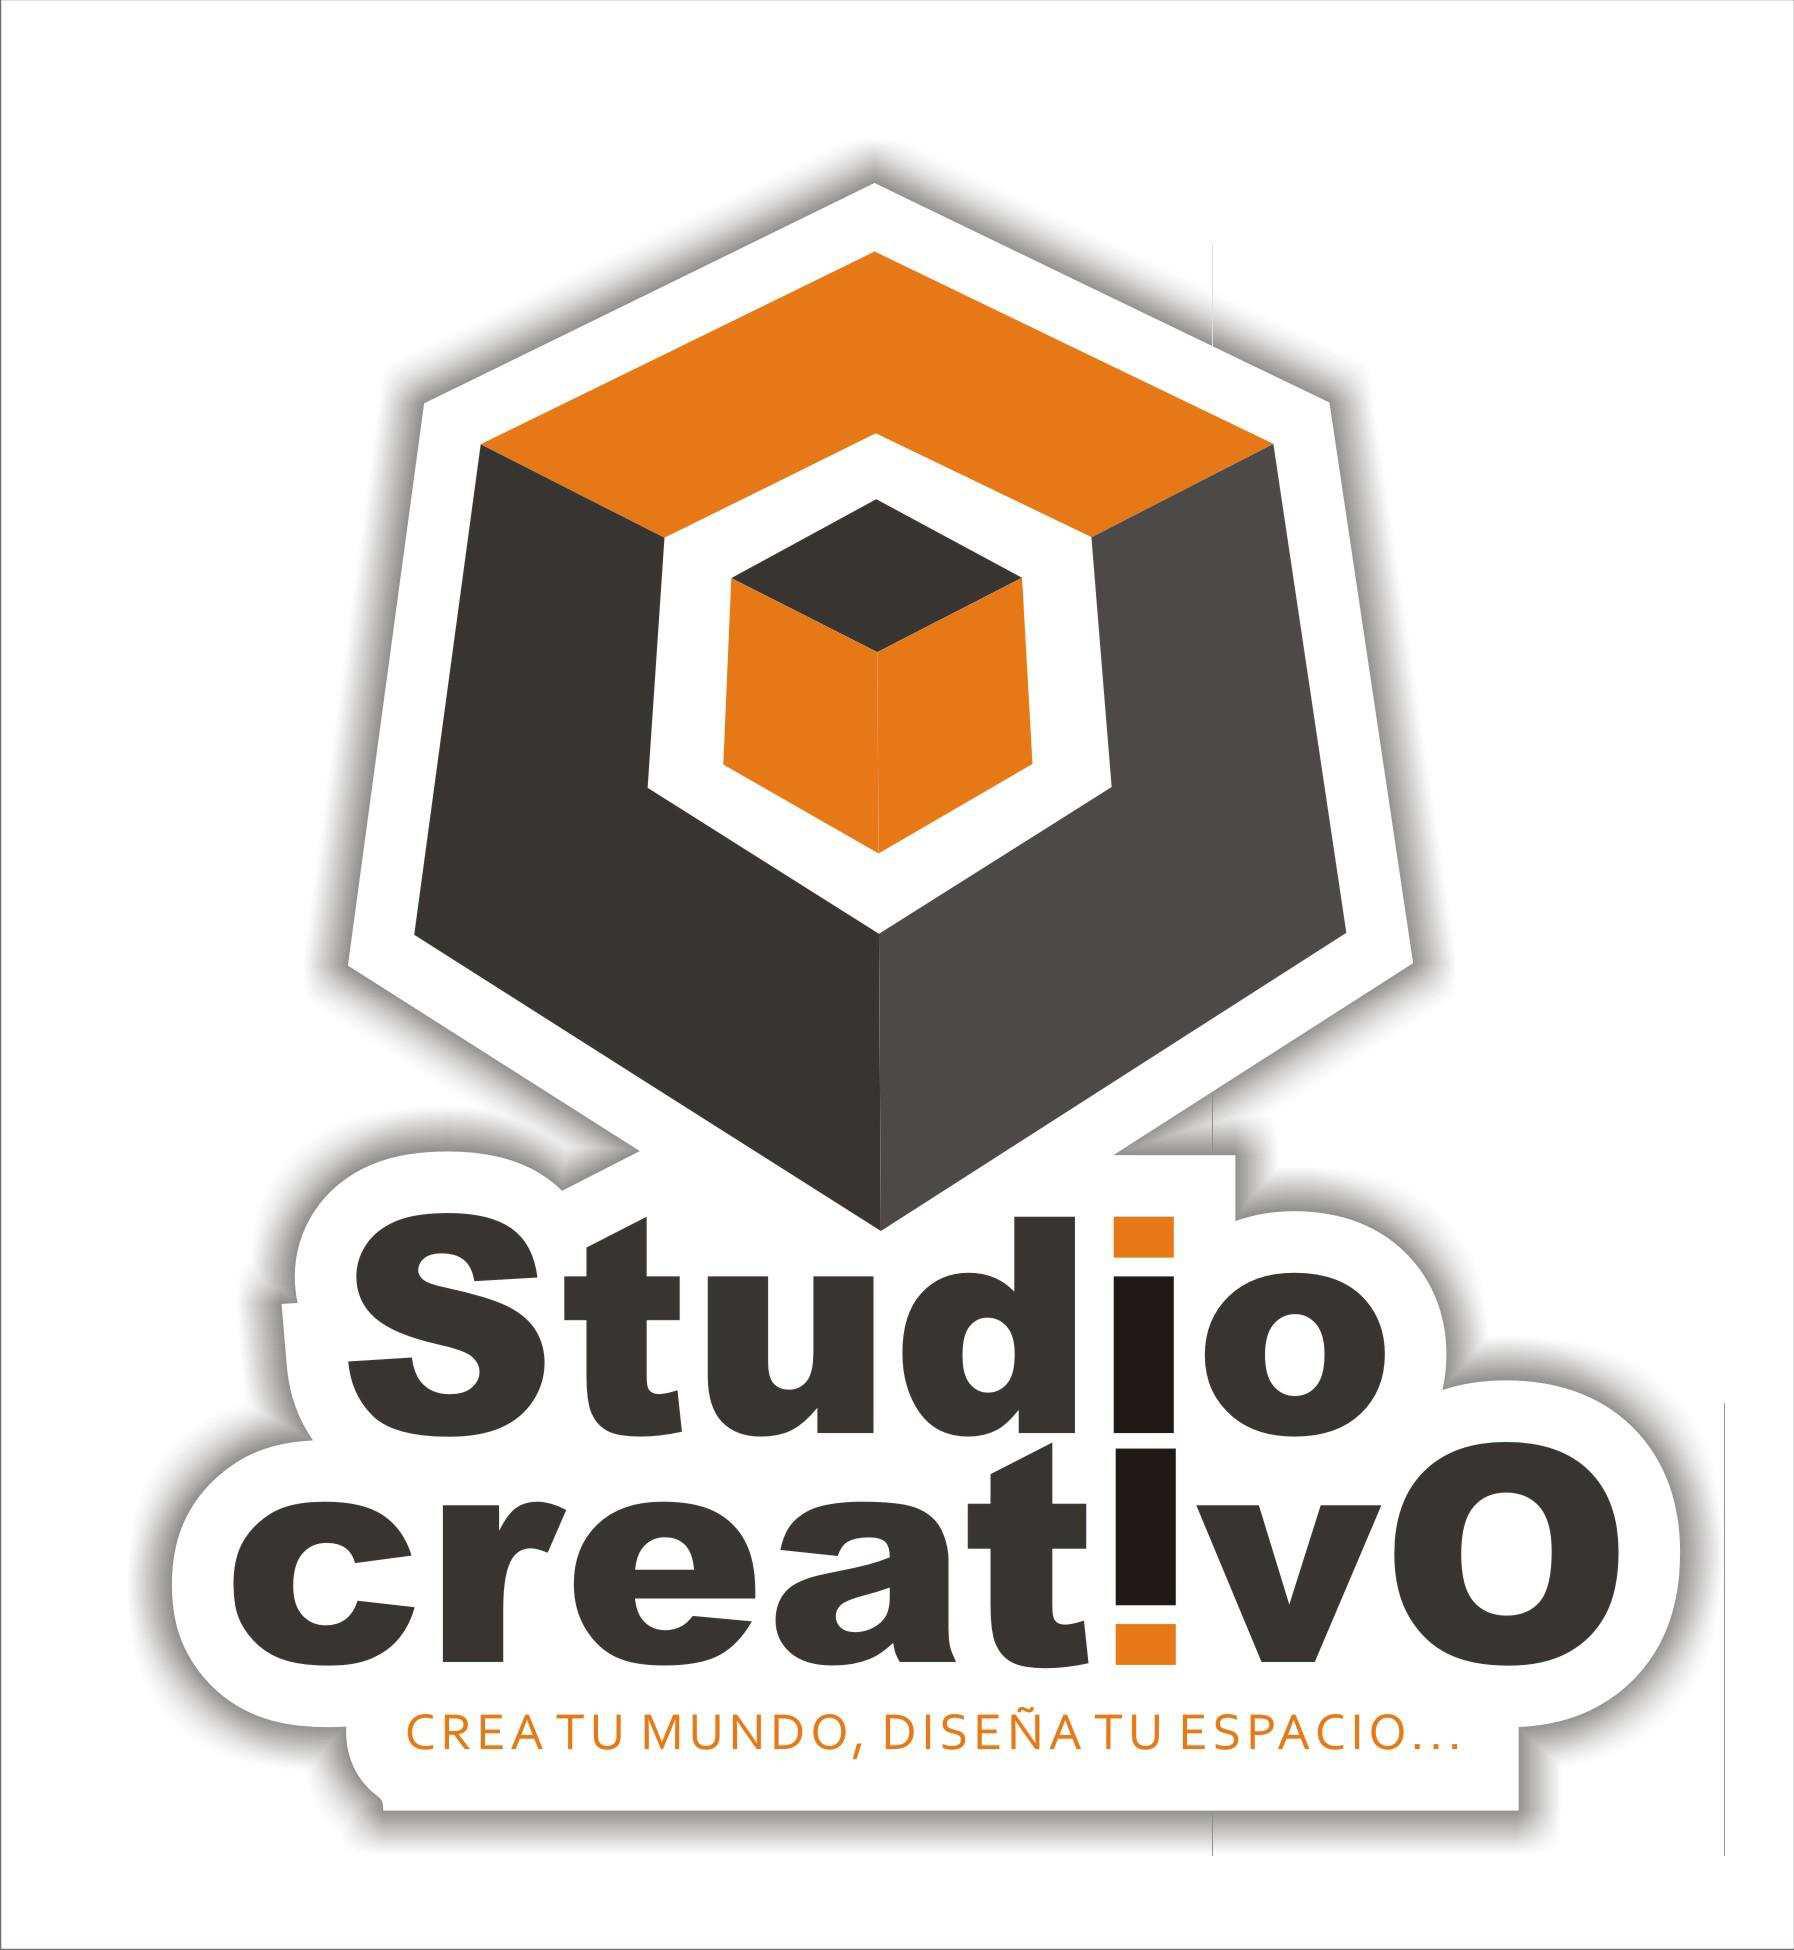 Cuscopolita studio creativo